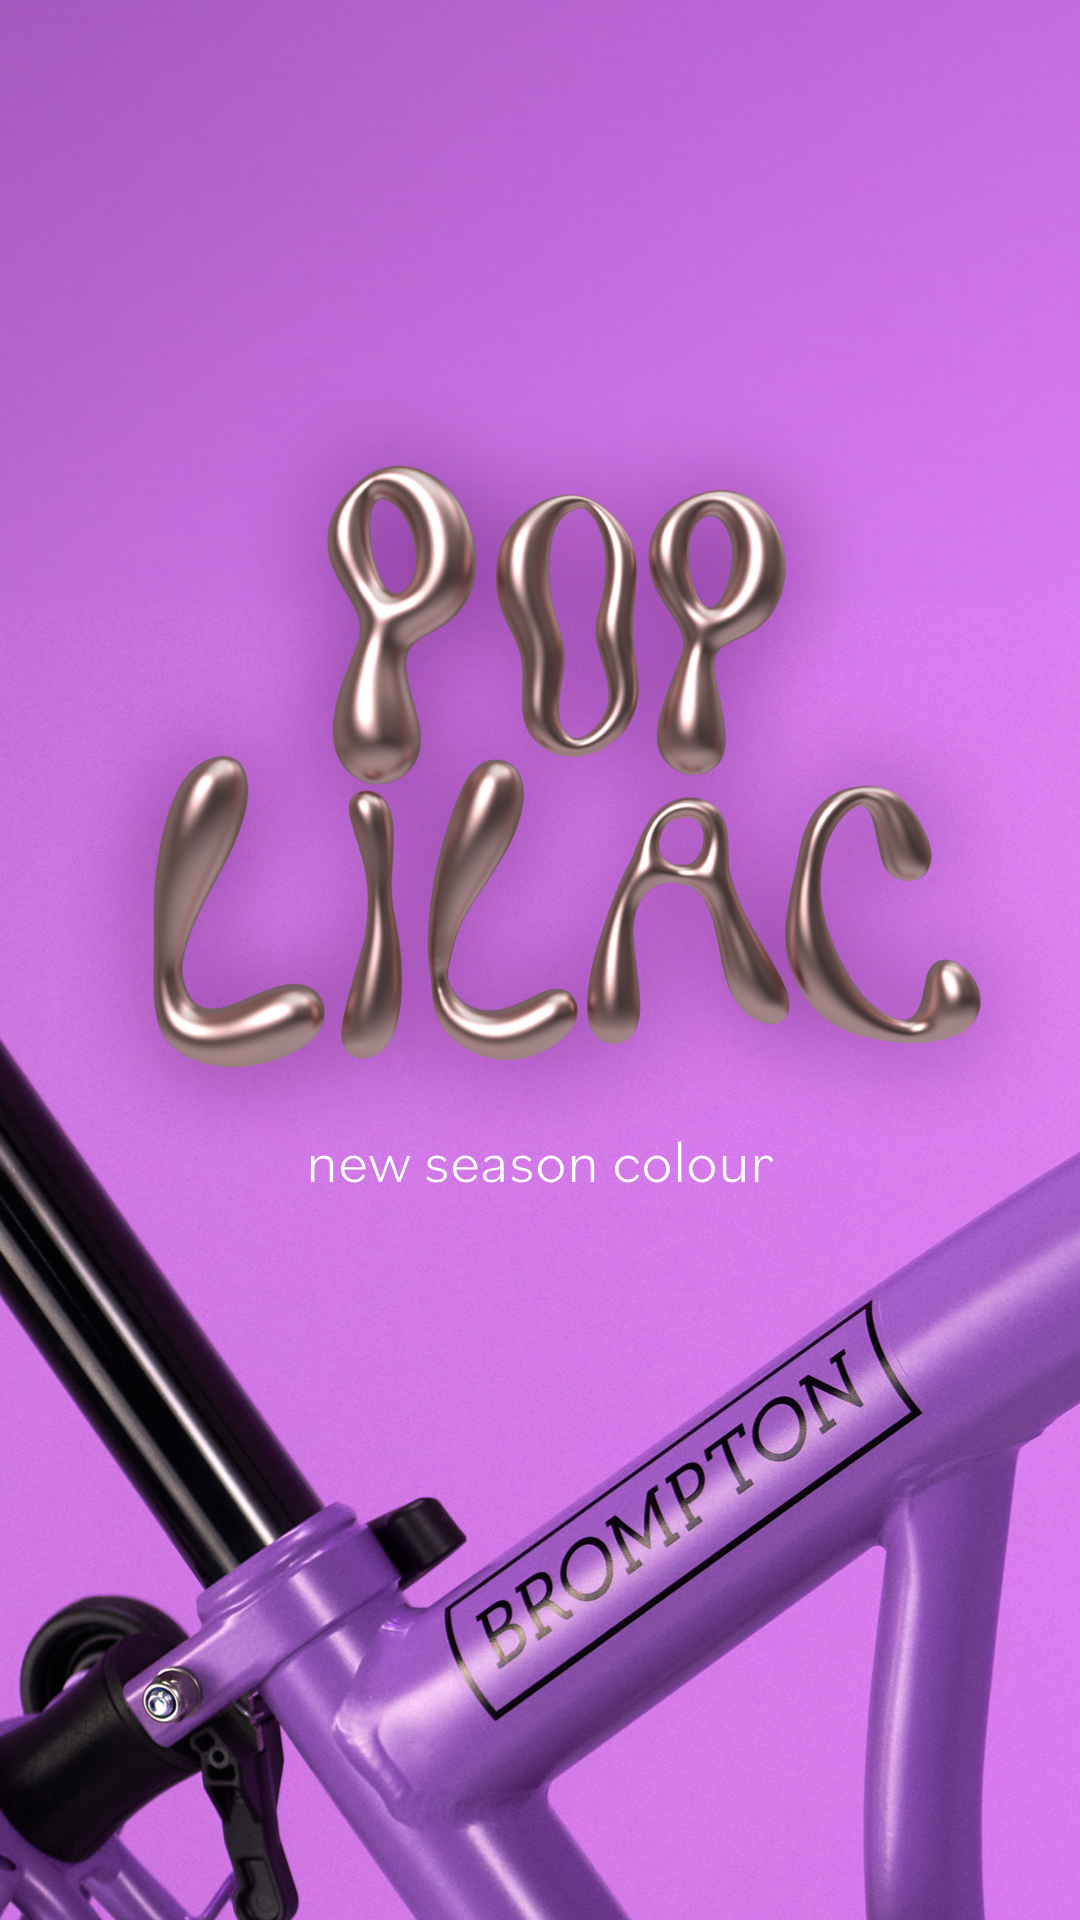 【BROMPTON】New シーズナブルカラー！「Pop Lilac」 | 池袋で自転車をお探しならY